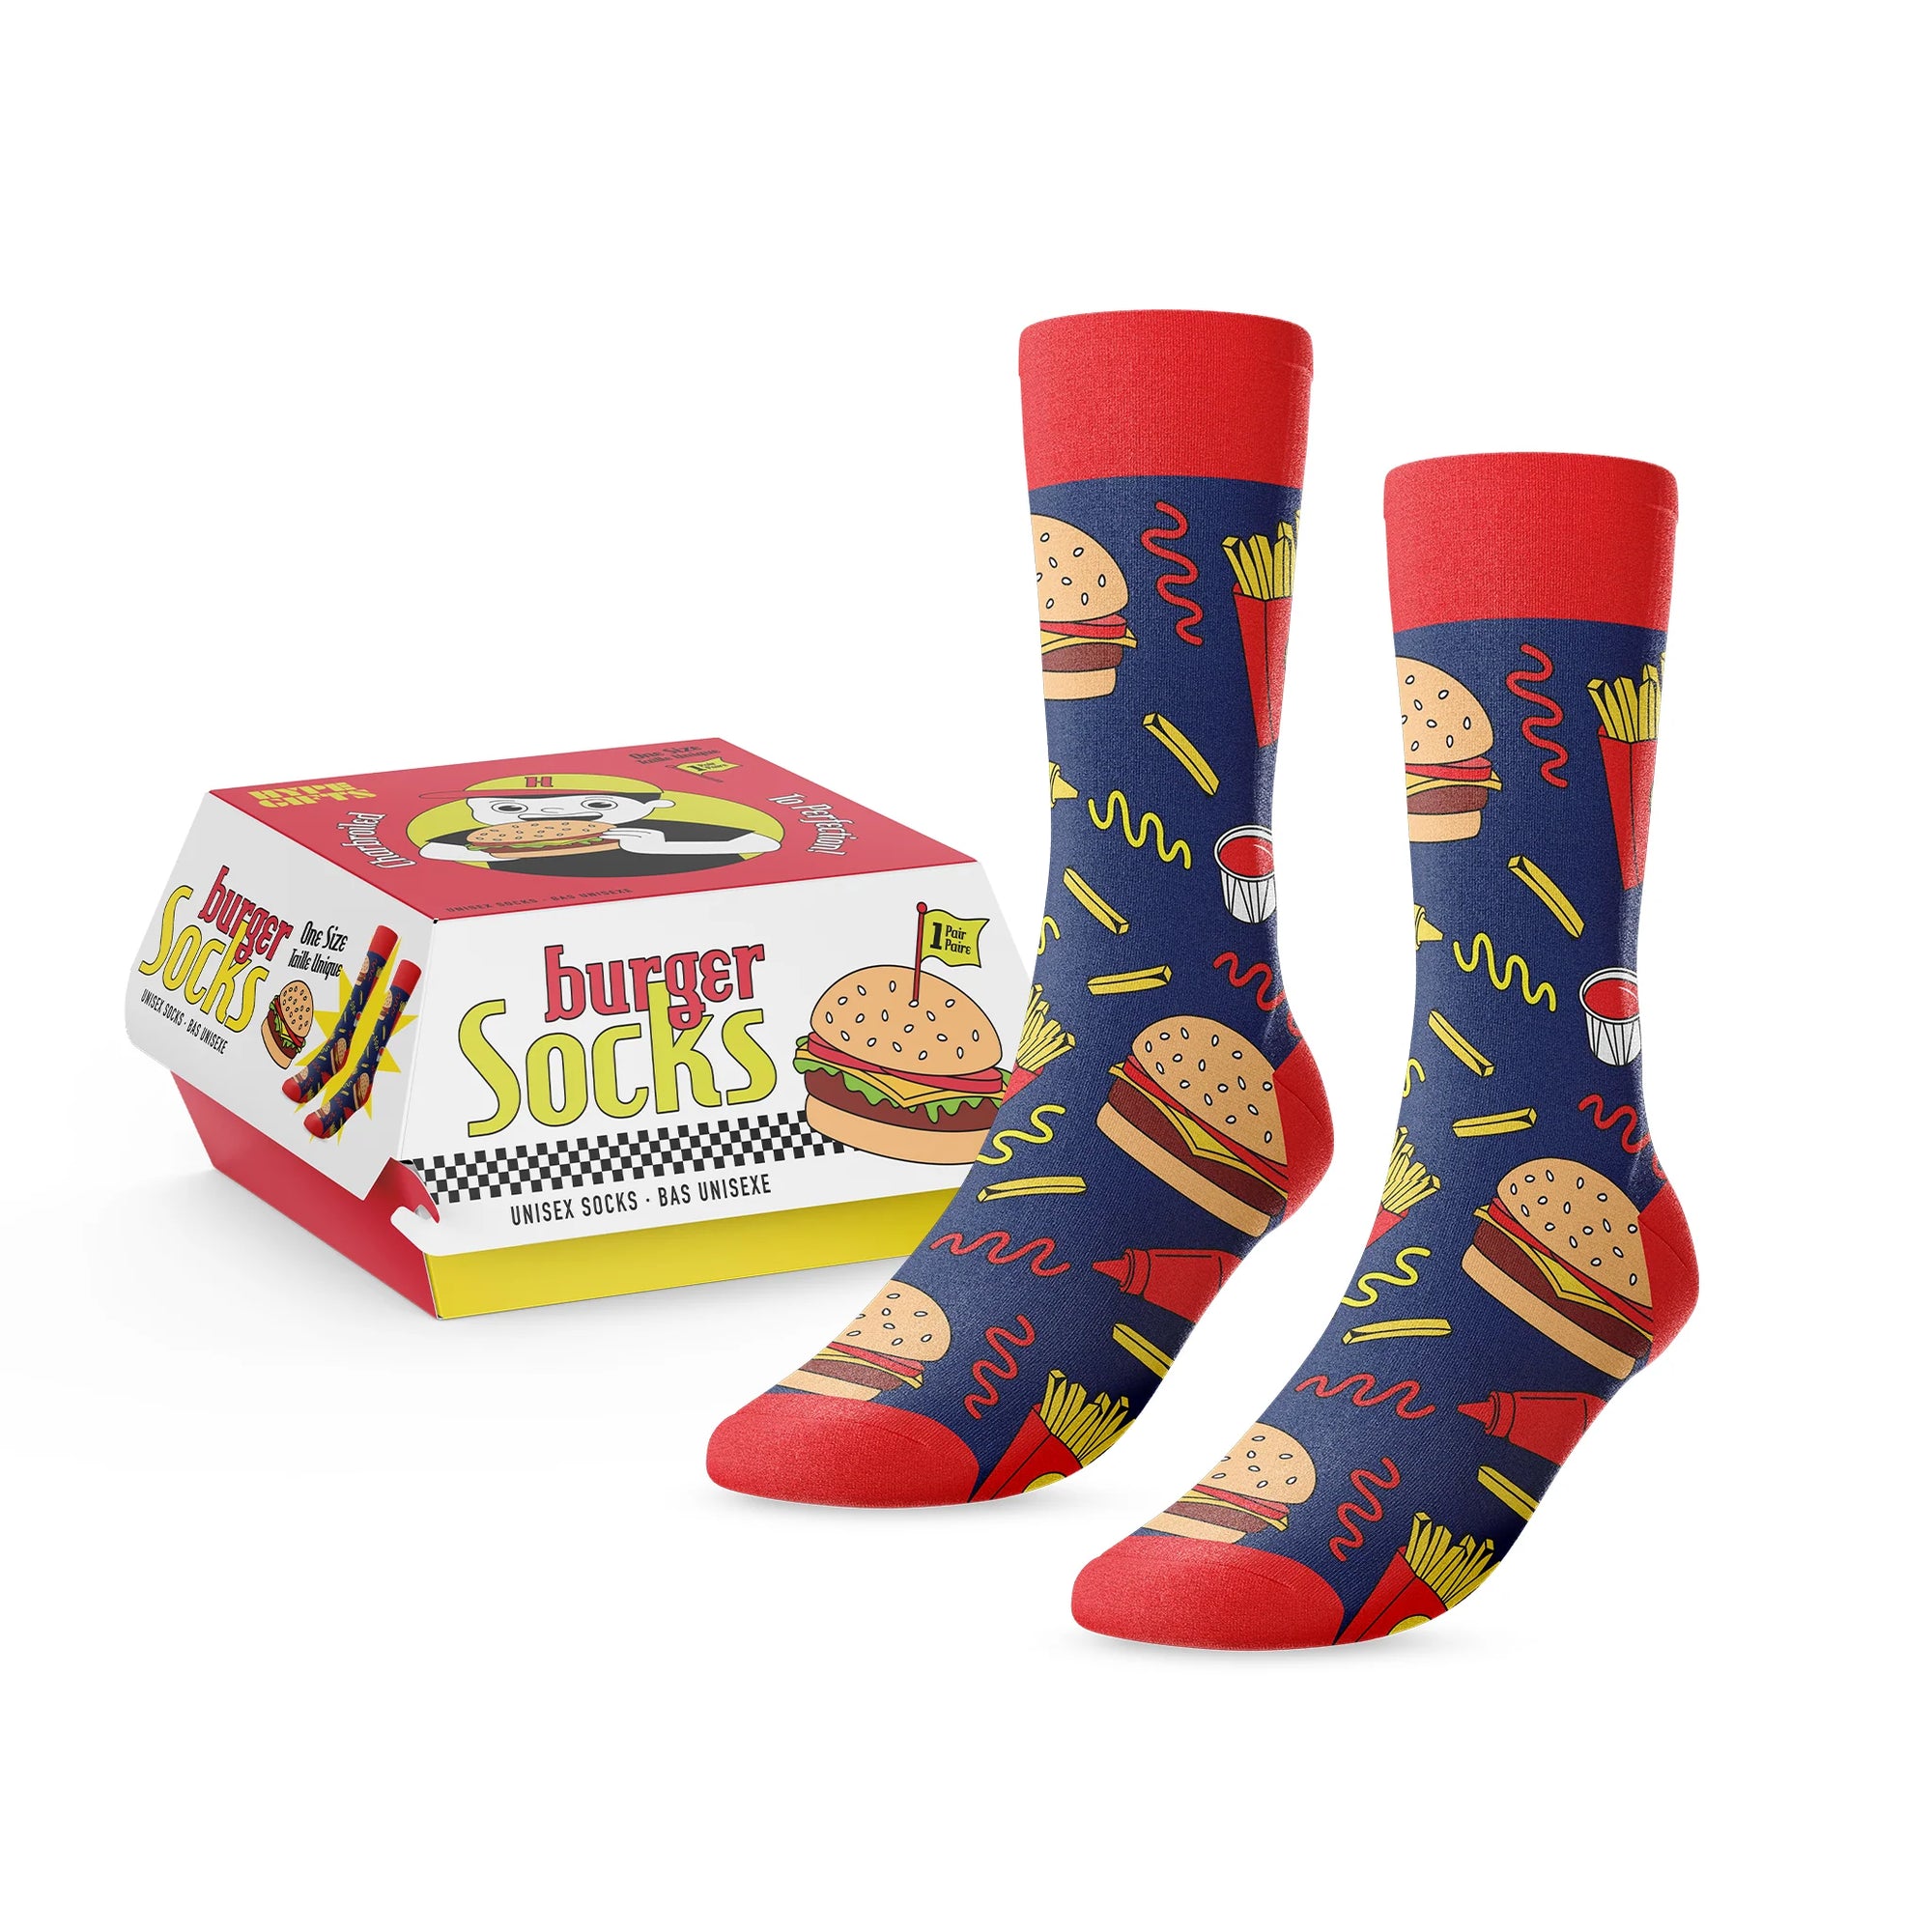 Burger Socks